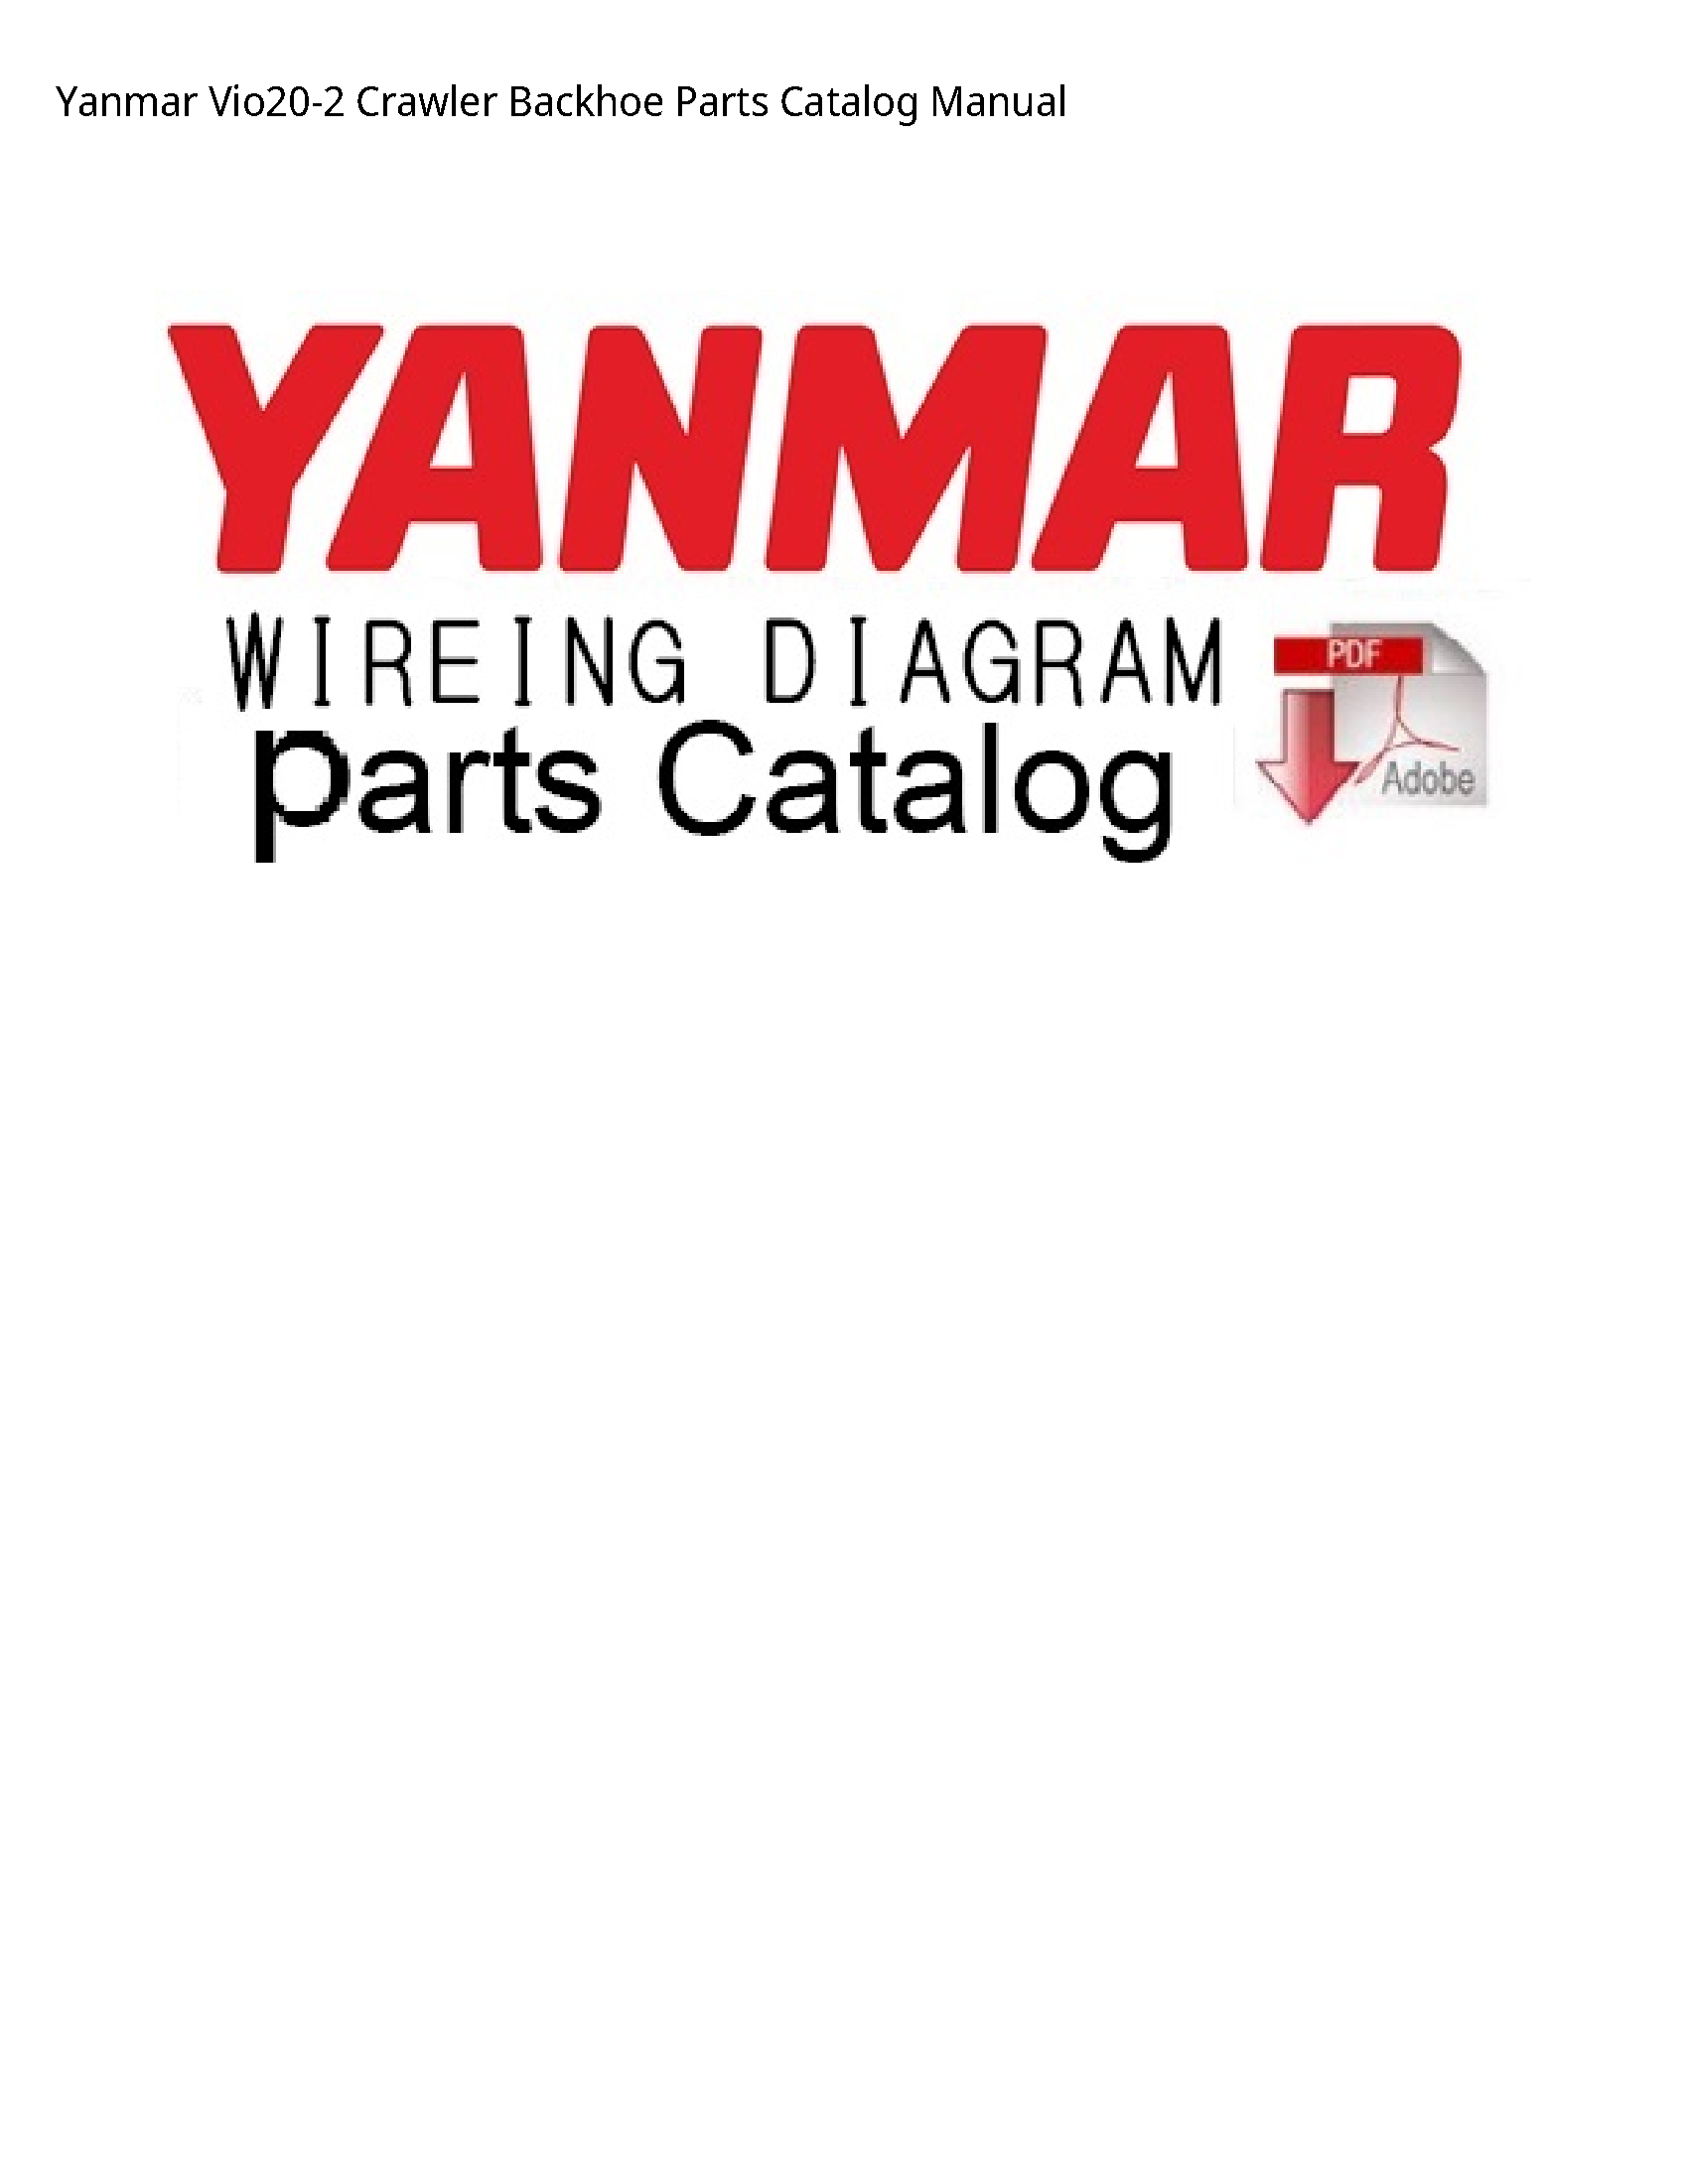 Yanmar Vio20-2 Crawler Backhoe Parts Catalog manual